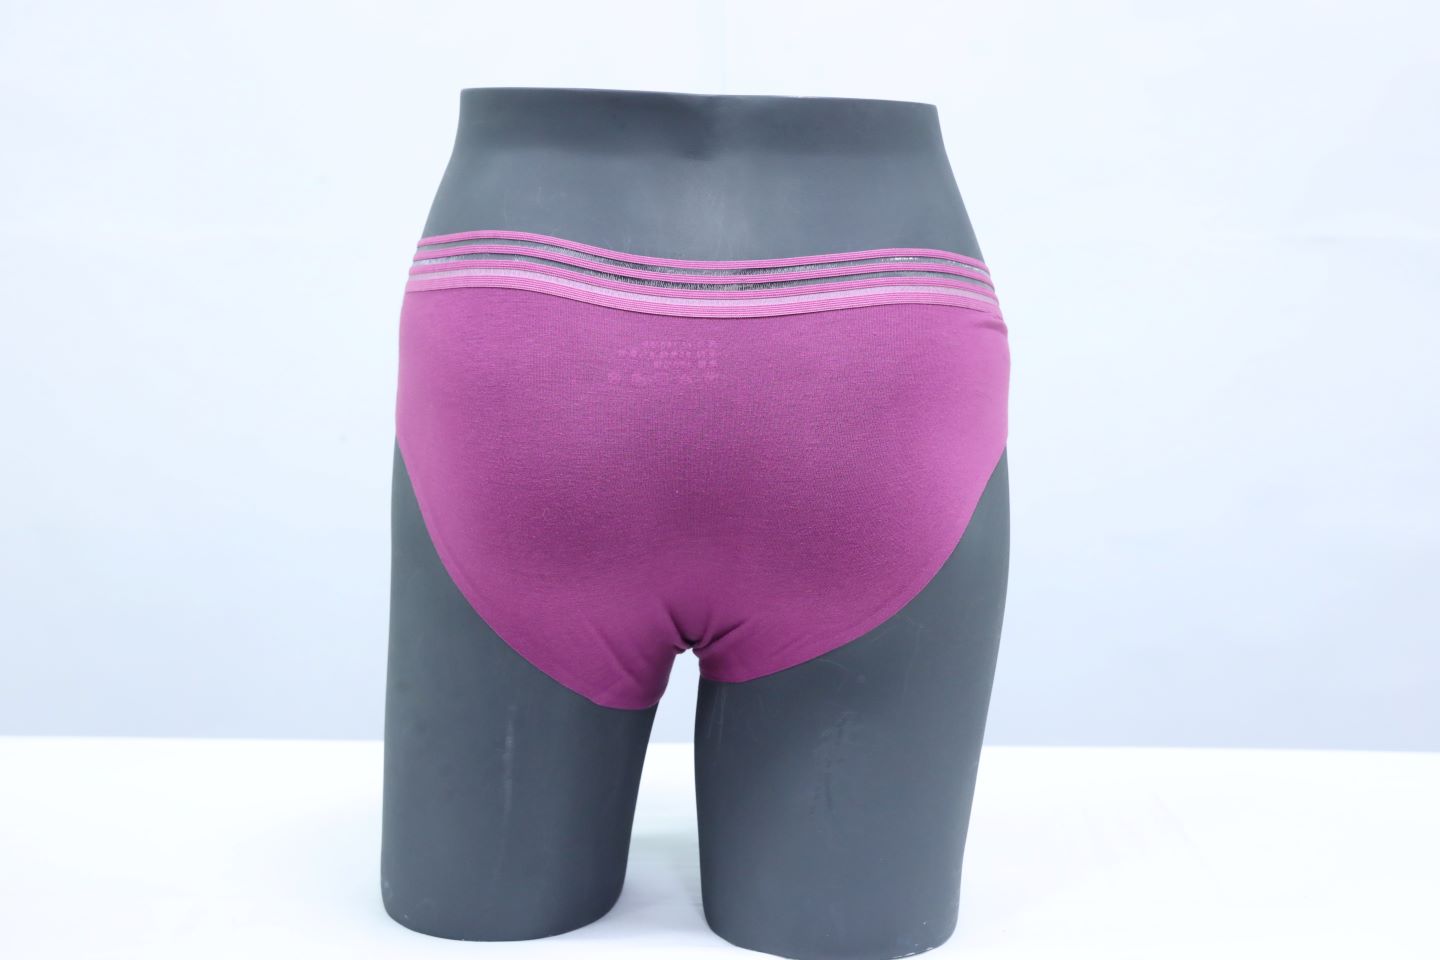 10082 - Premium Regular Cotton Panties Ultimate Comfort and Style